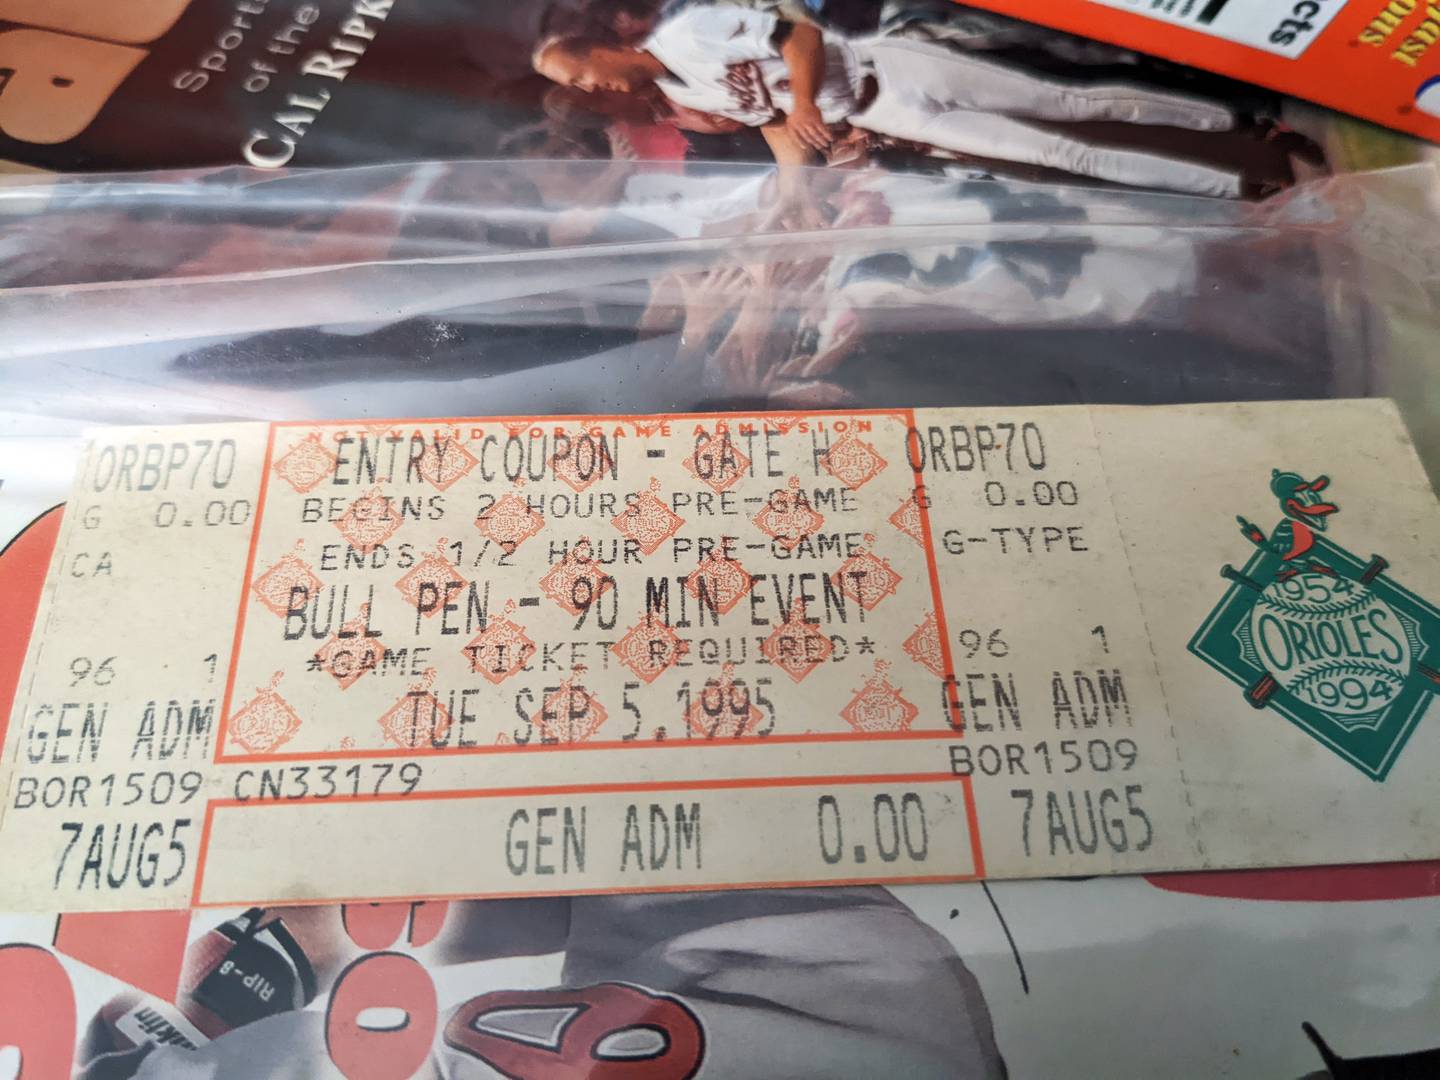 A photo of a ticket from a September 5, 1995 bullpen event.